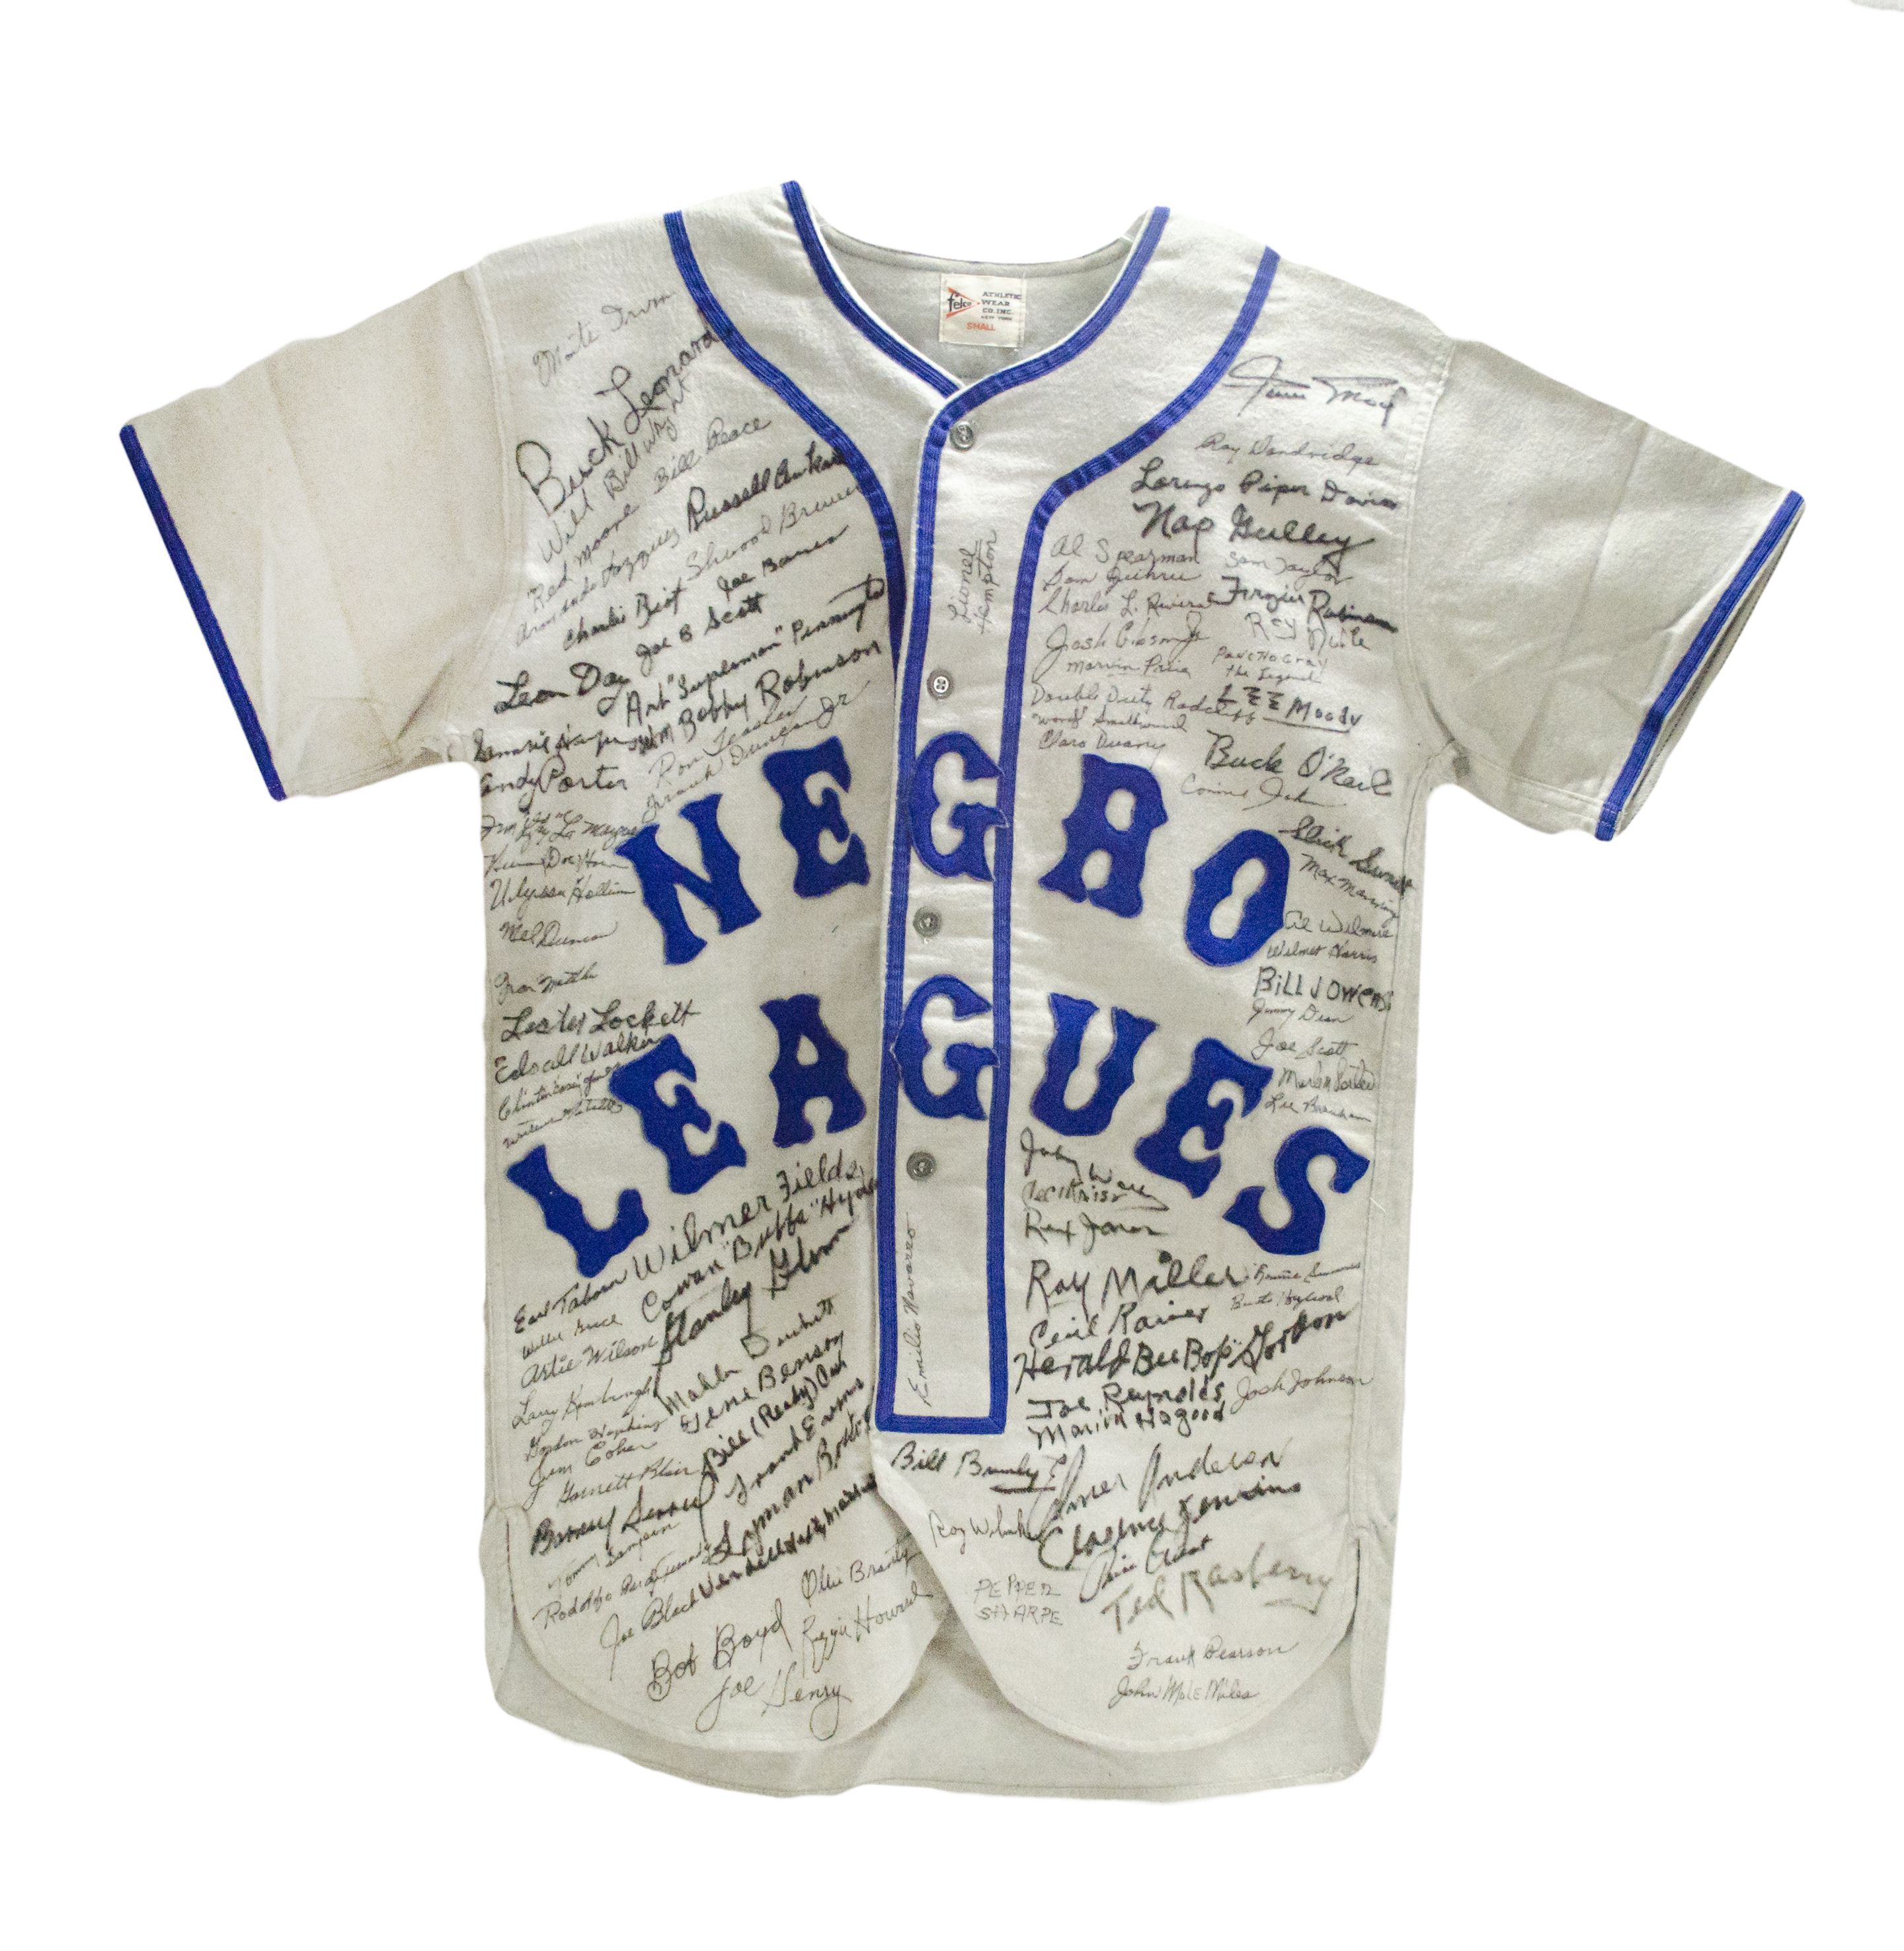 negro league baseball jerseys